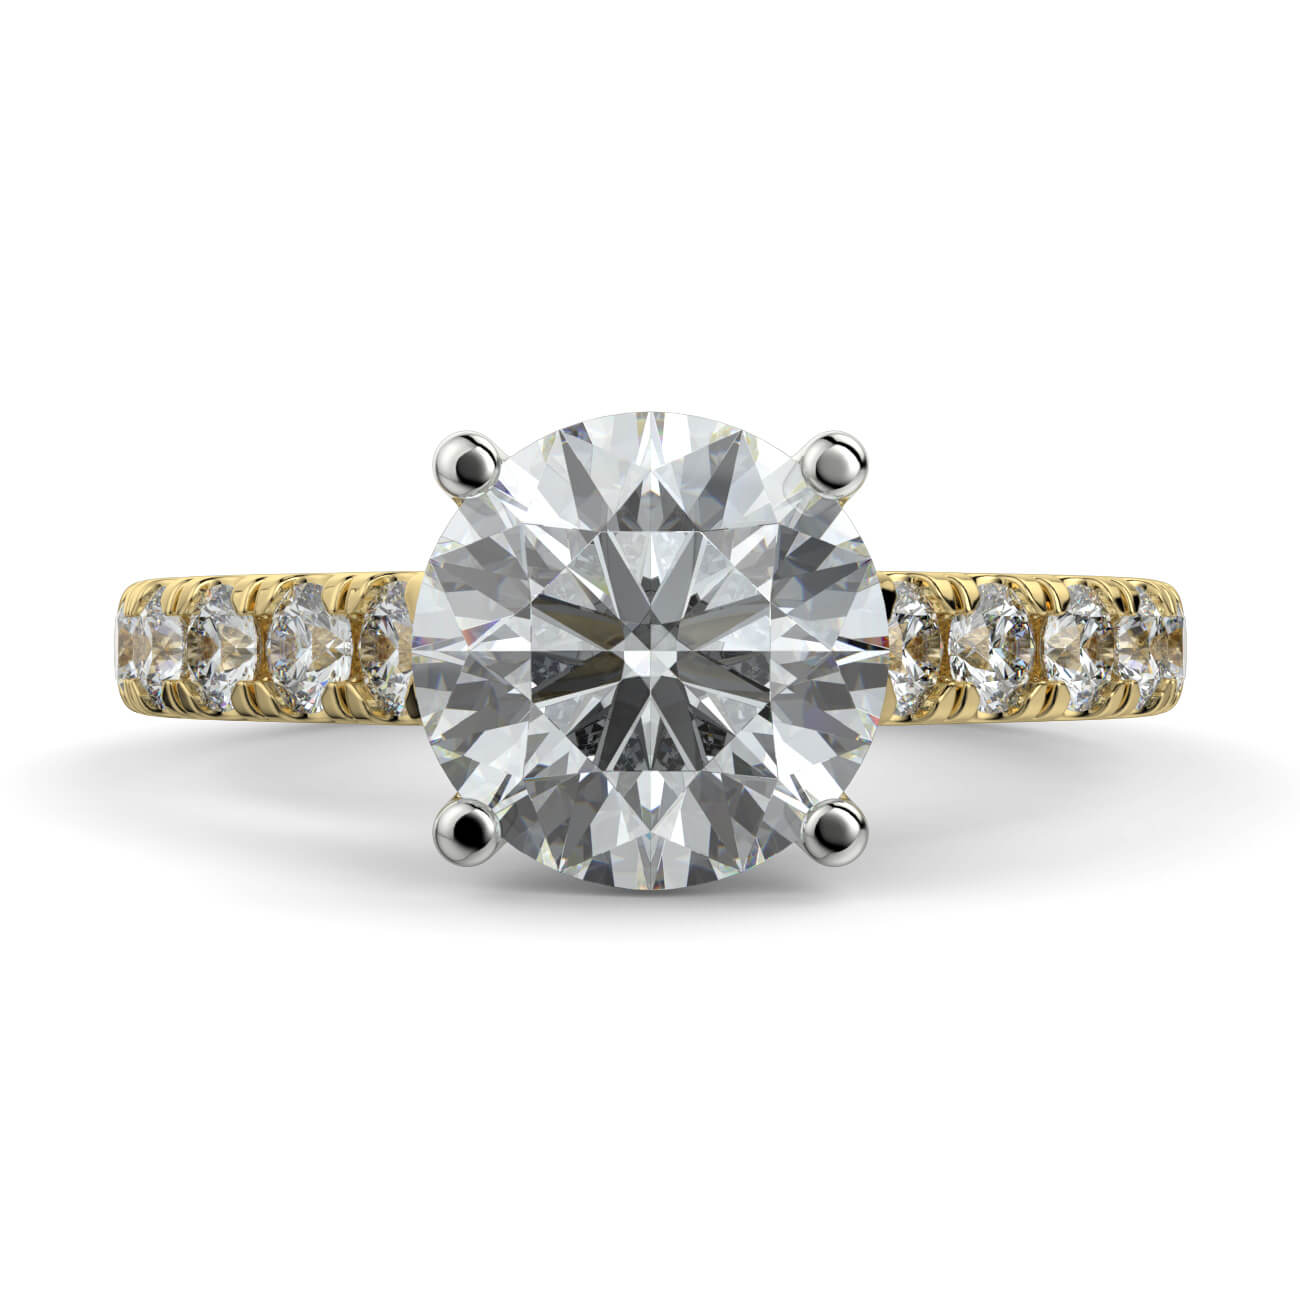 Round Brilliant Cut Diamond Engagement Ring In 18k Yellow and White Gold – Australian Diamond Network